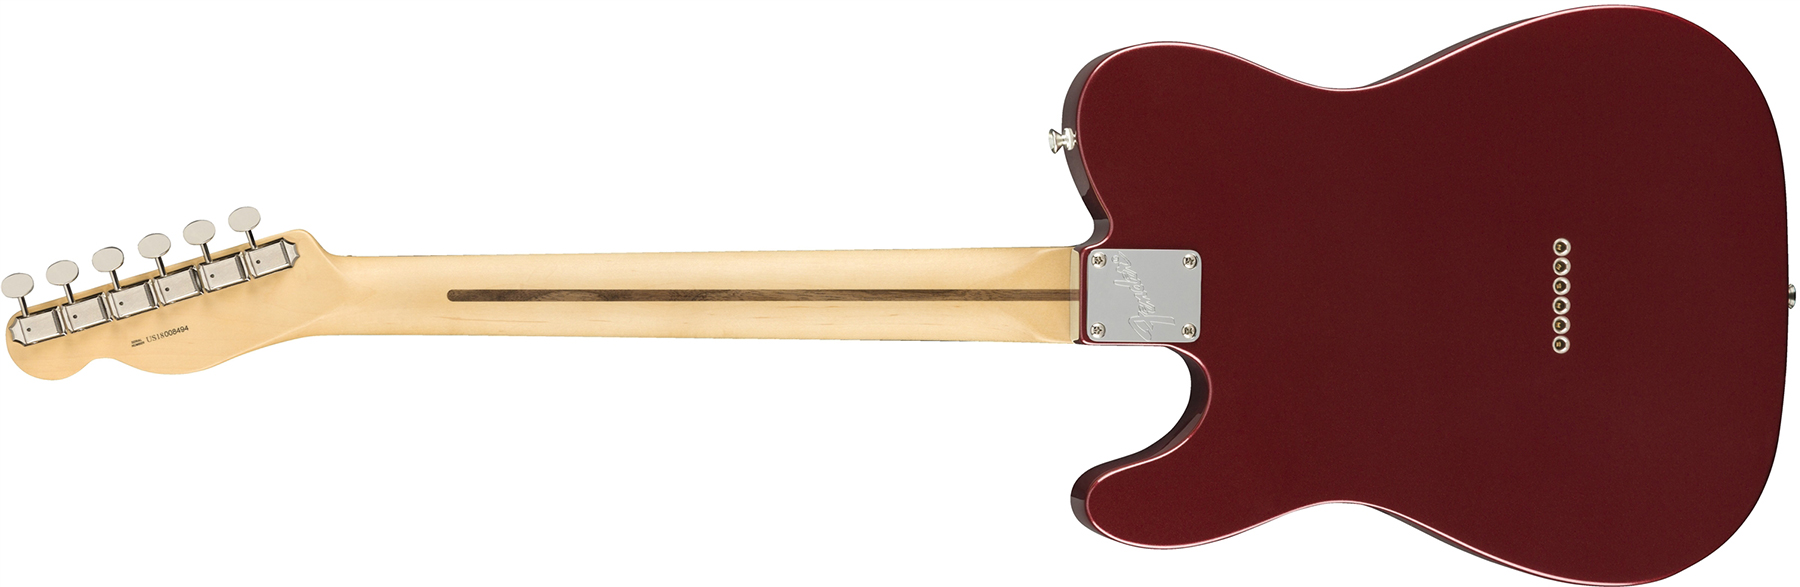 Fender Tele American Performer Hum Usa Sh Rw - Aubergine - Tel shape electric guitar - Variation 1